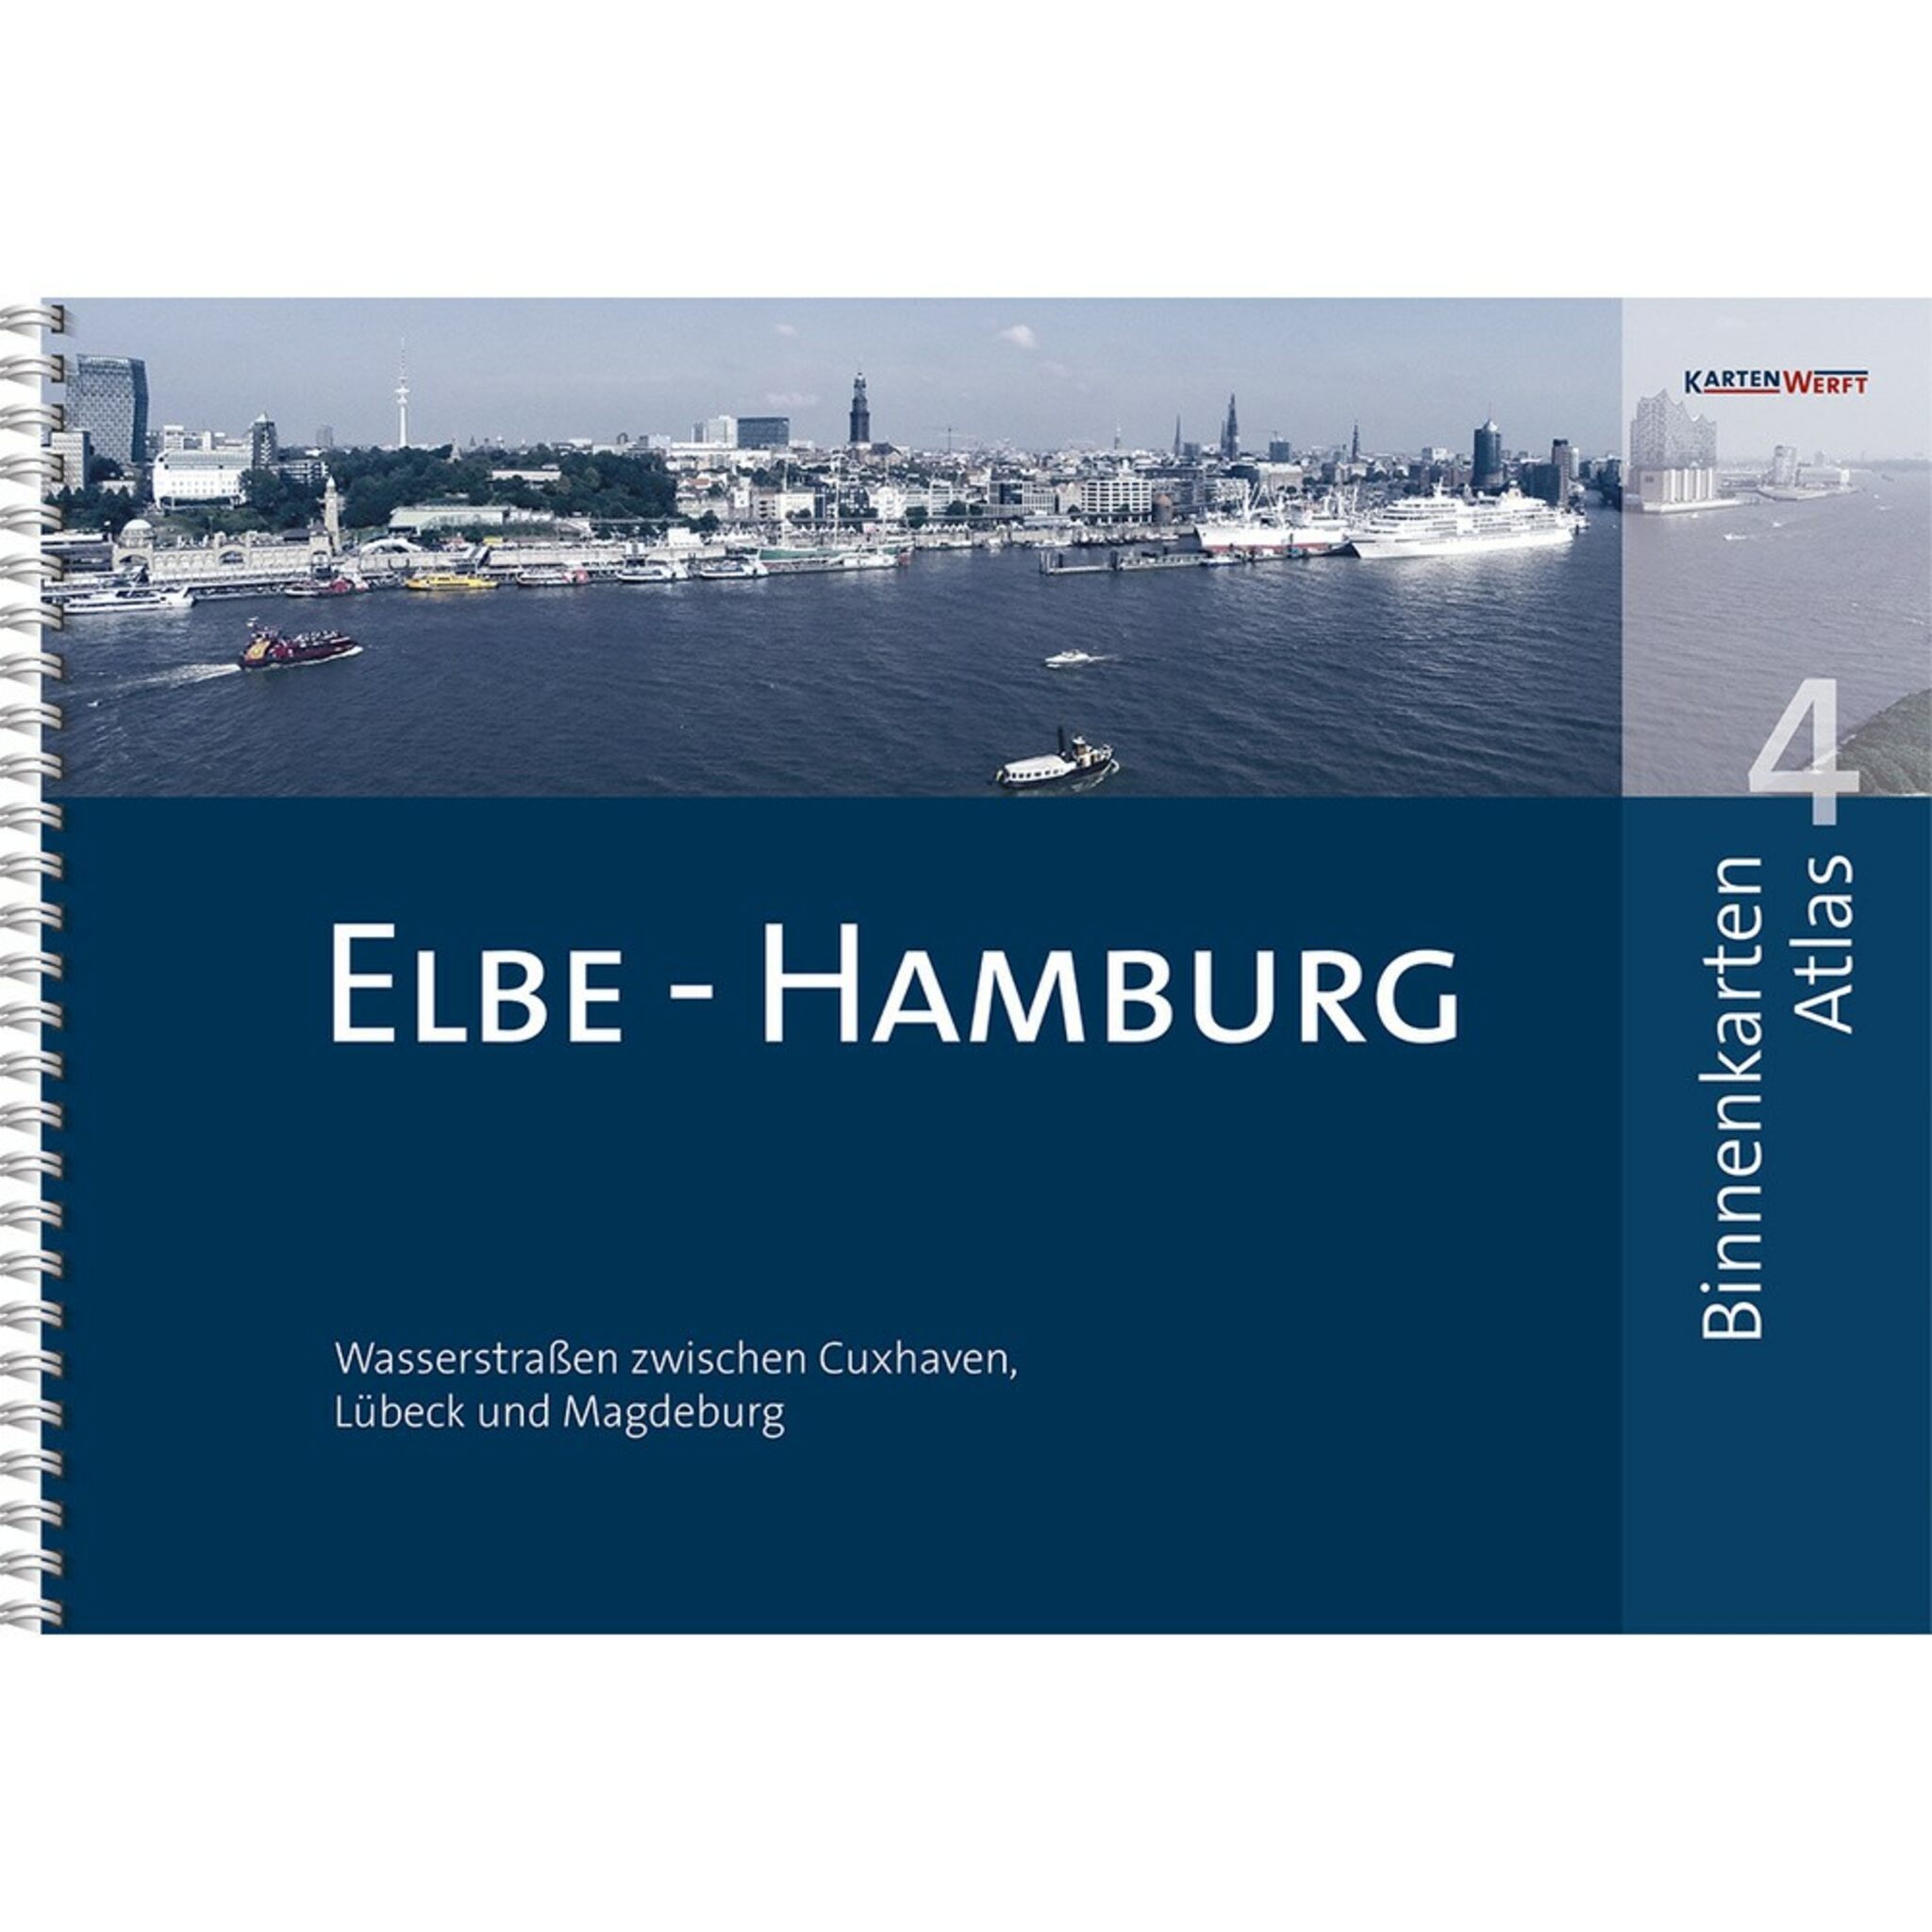 KartenWerft BINNENKARTEN ATLAS 4 Elbe - Hamburg